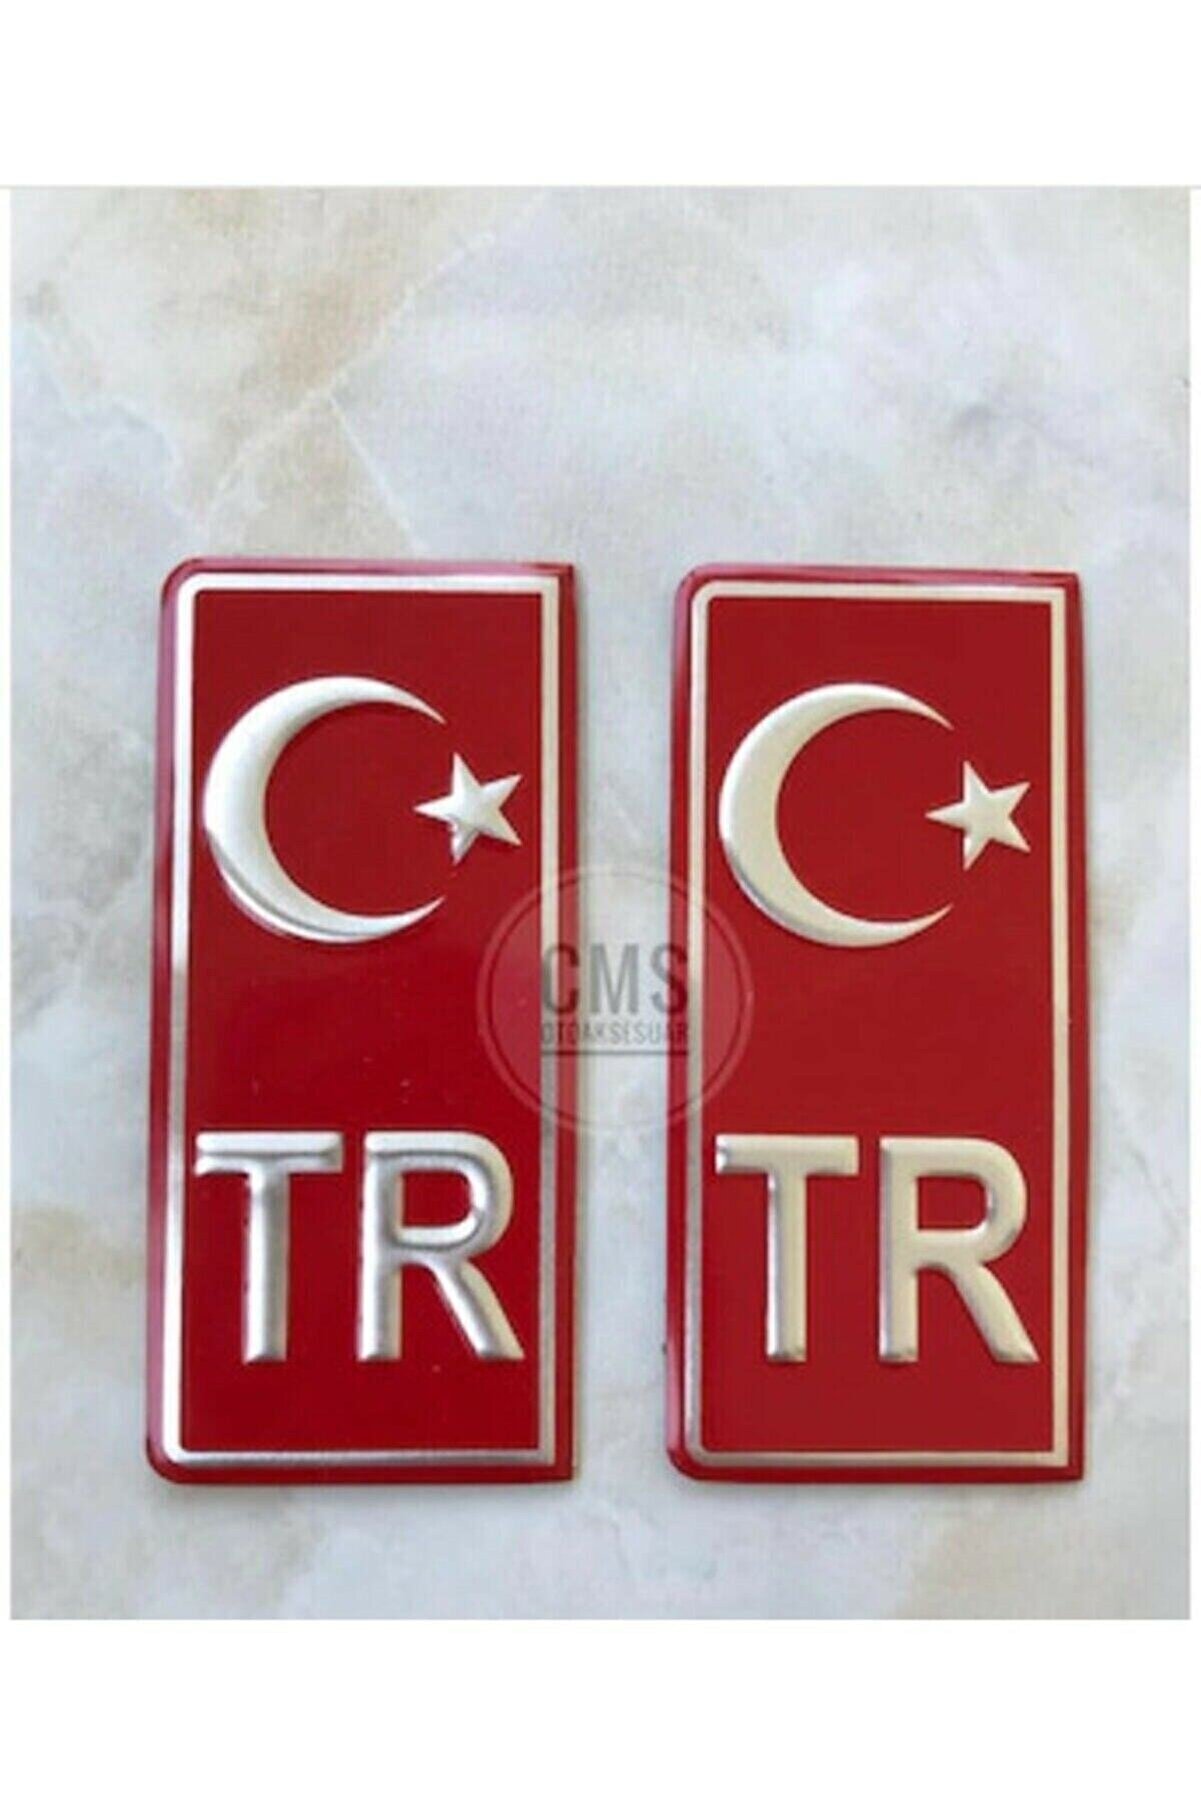 KDMAKSESUAR Tr Plaka Stıcker 2'li - Türkiye Plaka Stıcker - Türkiye Plakalık Stickeri